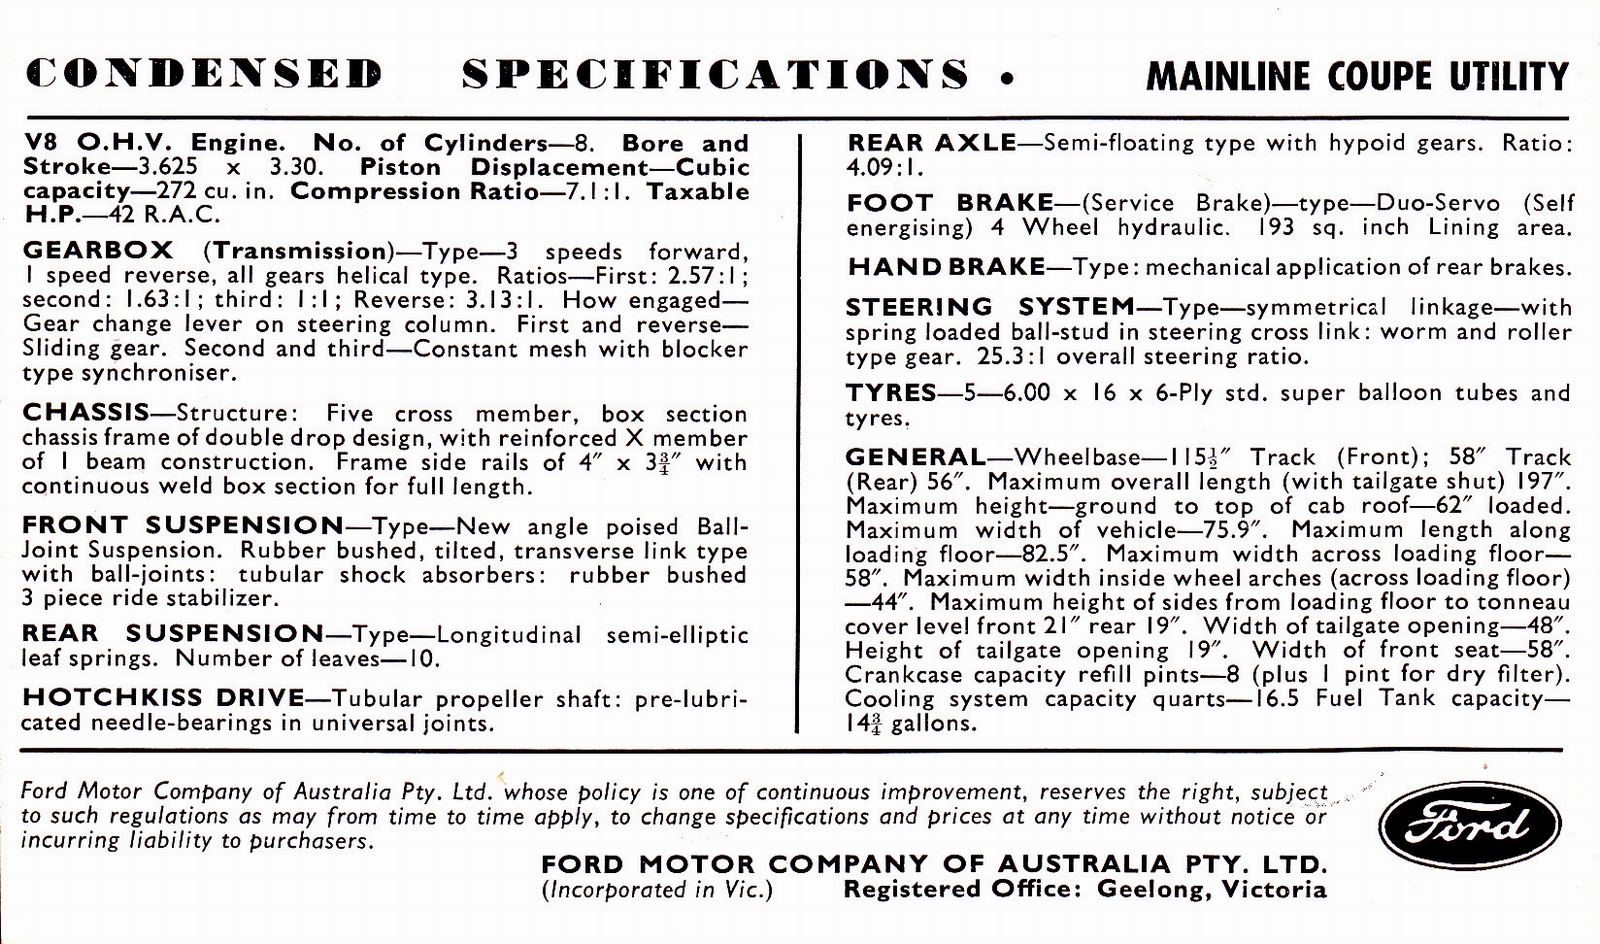 n_1957 Ford Mainline Utility Postcard (Aus)-01b.jpg